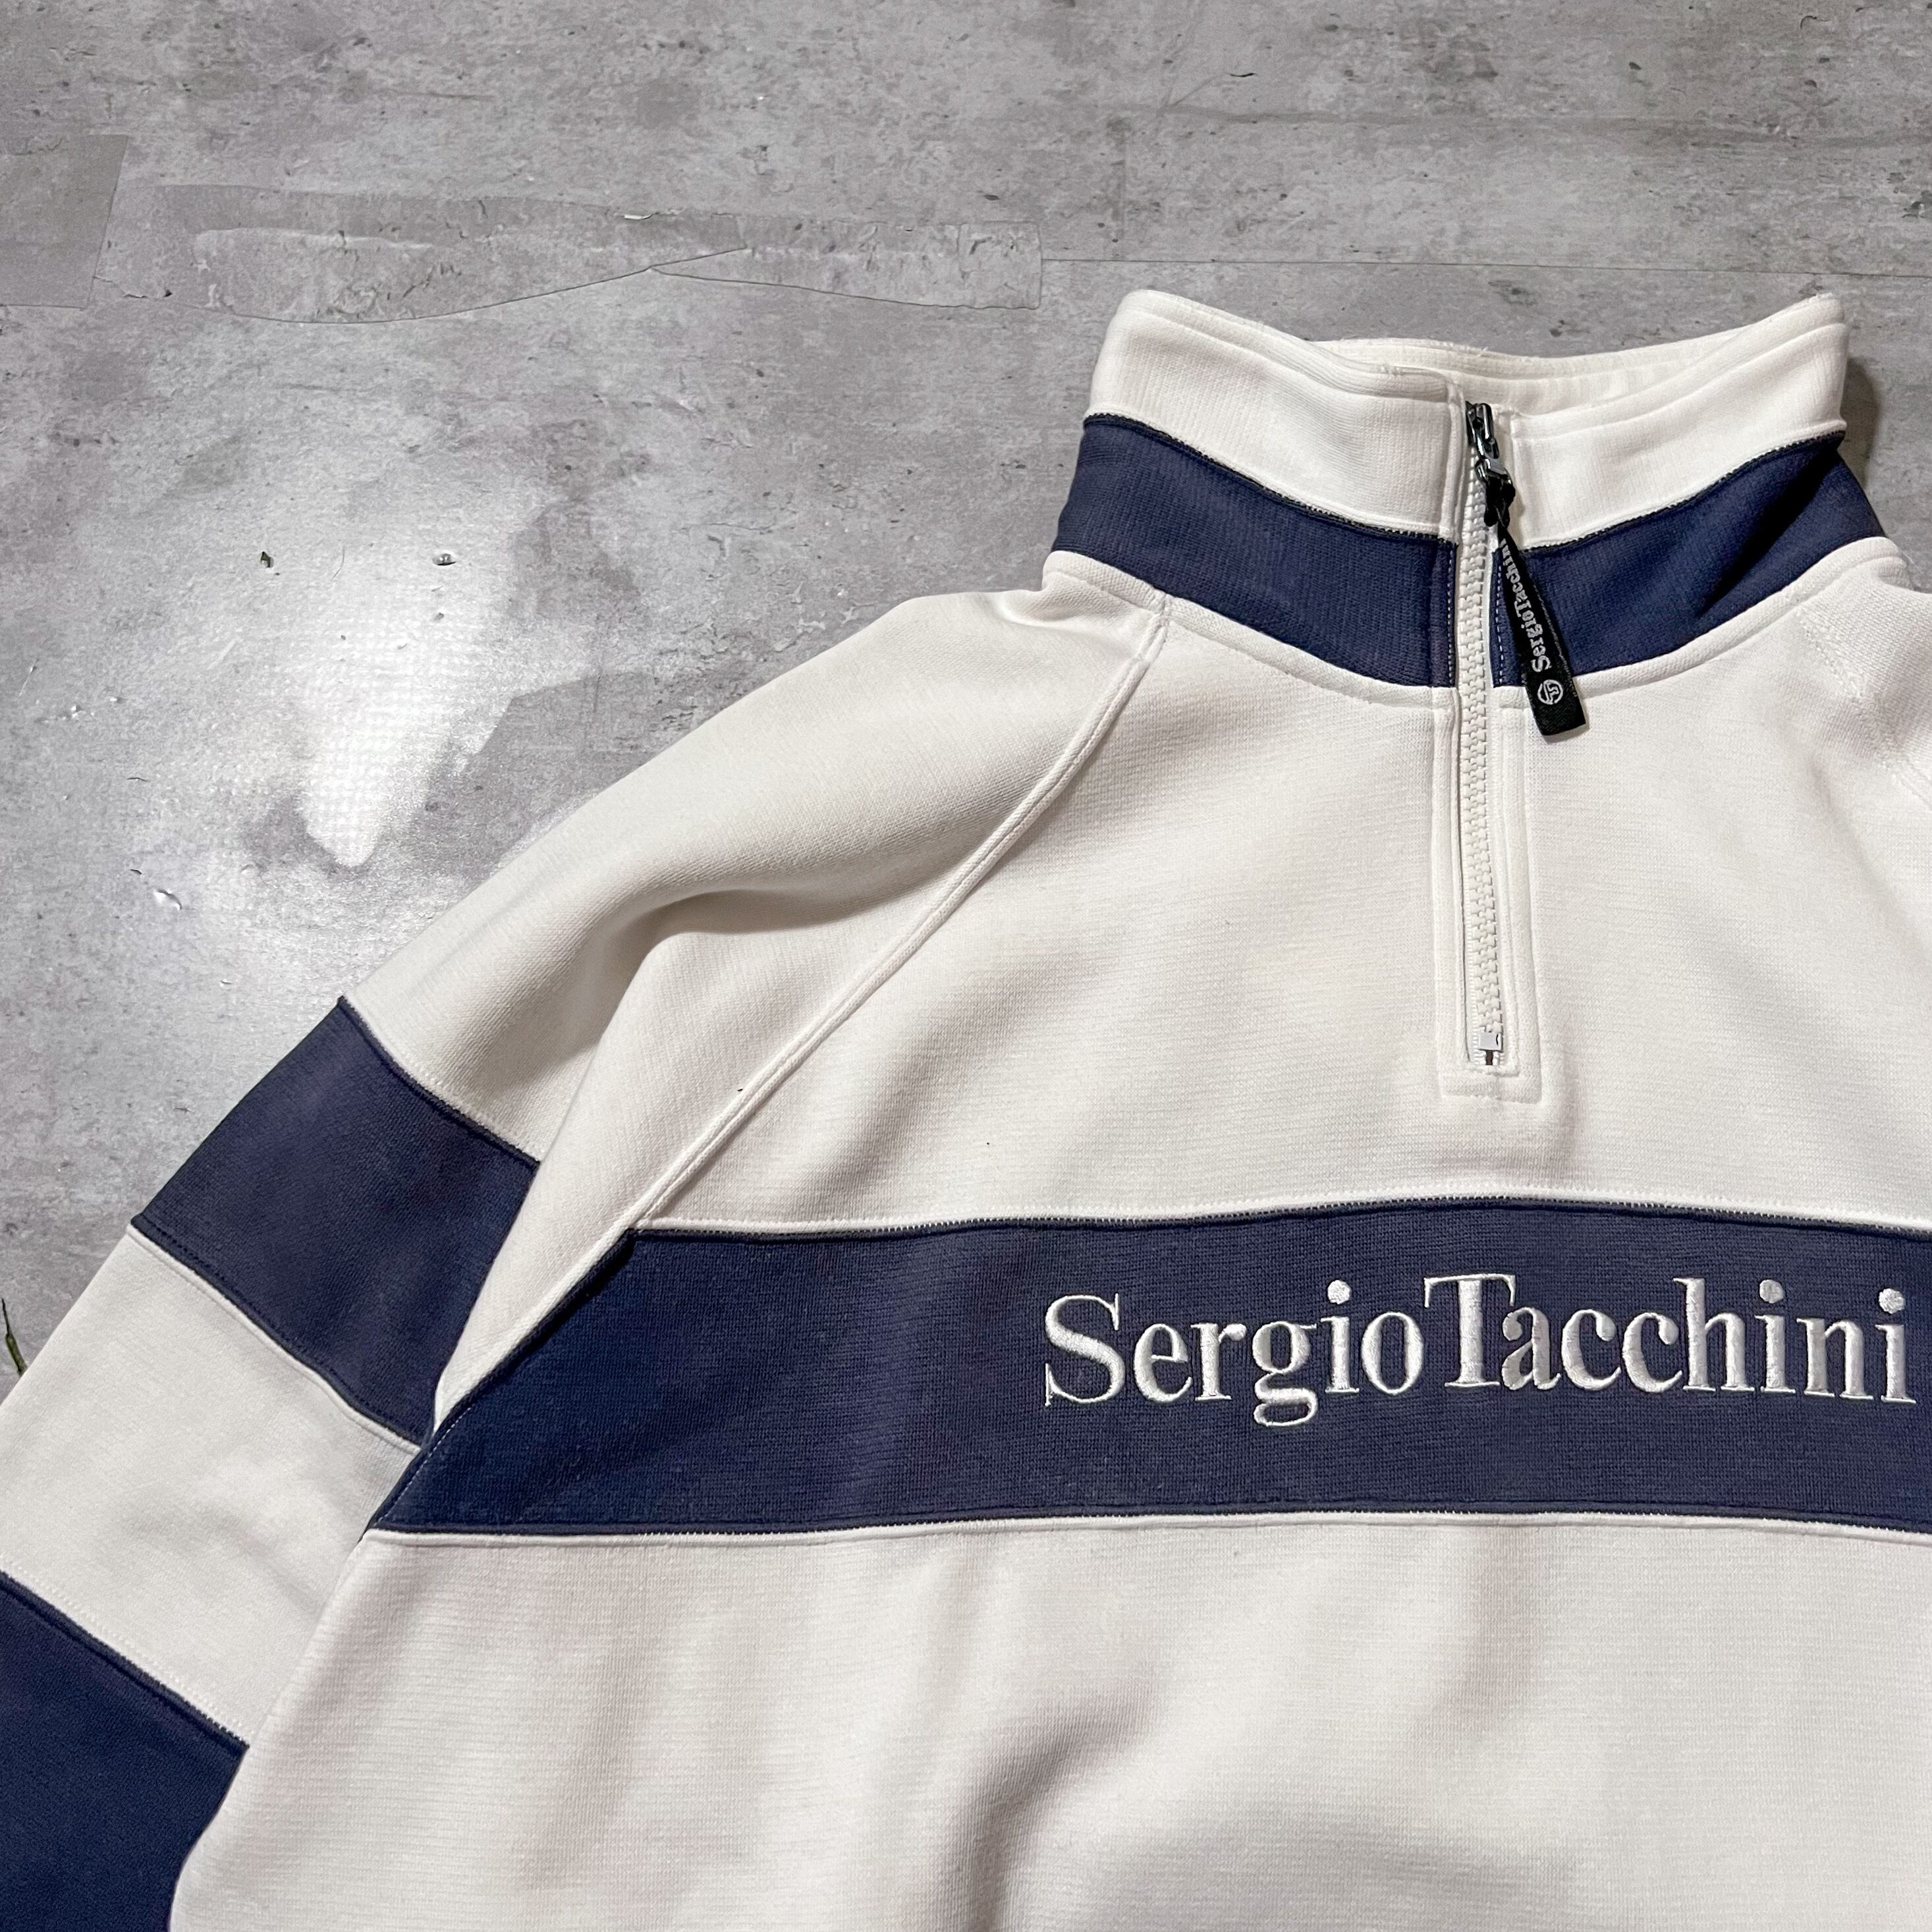 90s-01s “sergio tacchini” jersey pullover shirt 90年代 セルジオ 